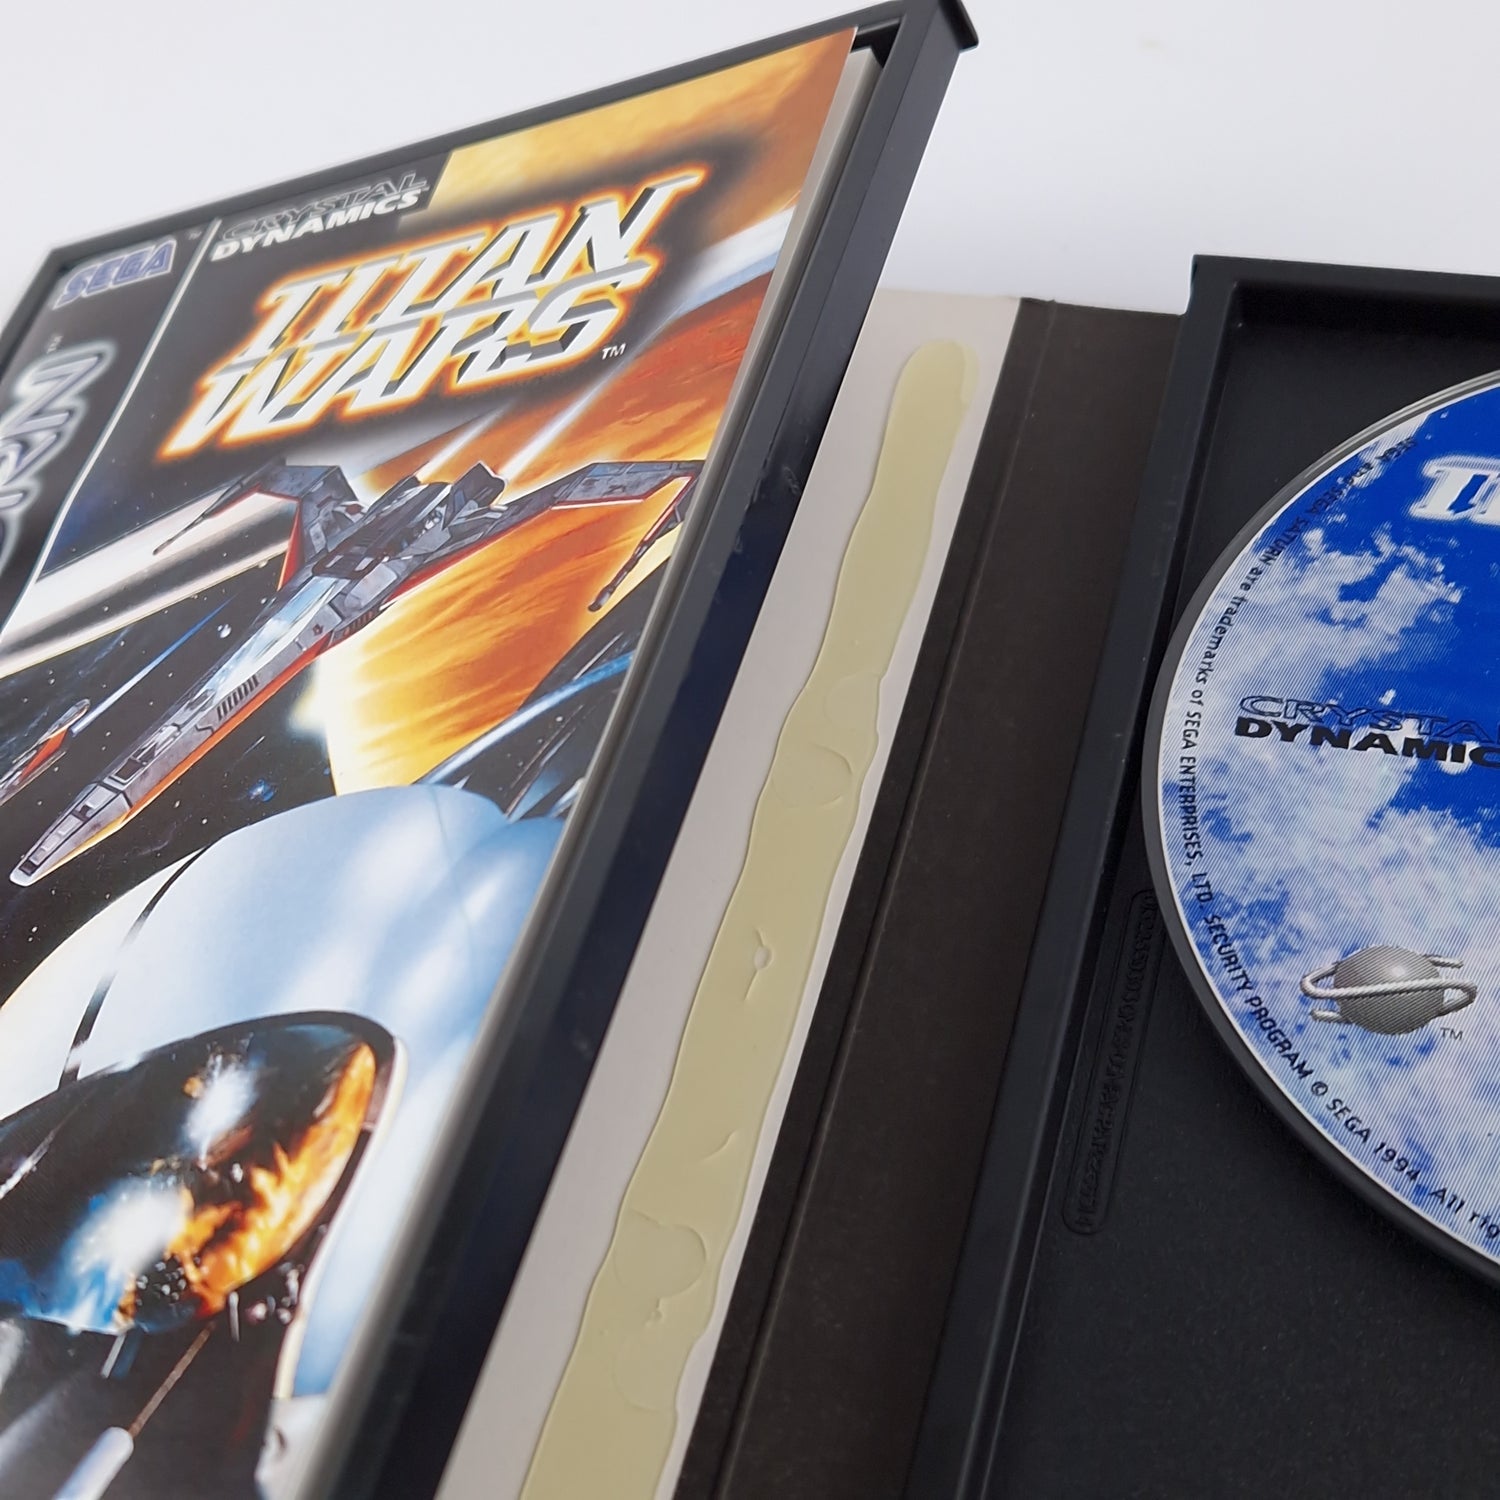 Sega Saturn Game: Titan Wars - OVP & Instructions PAL CD | Crystal Dynamics